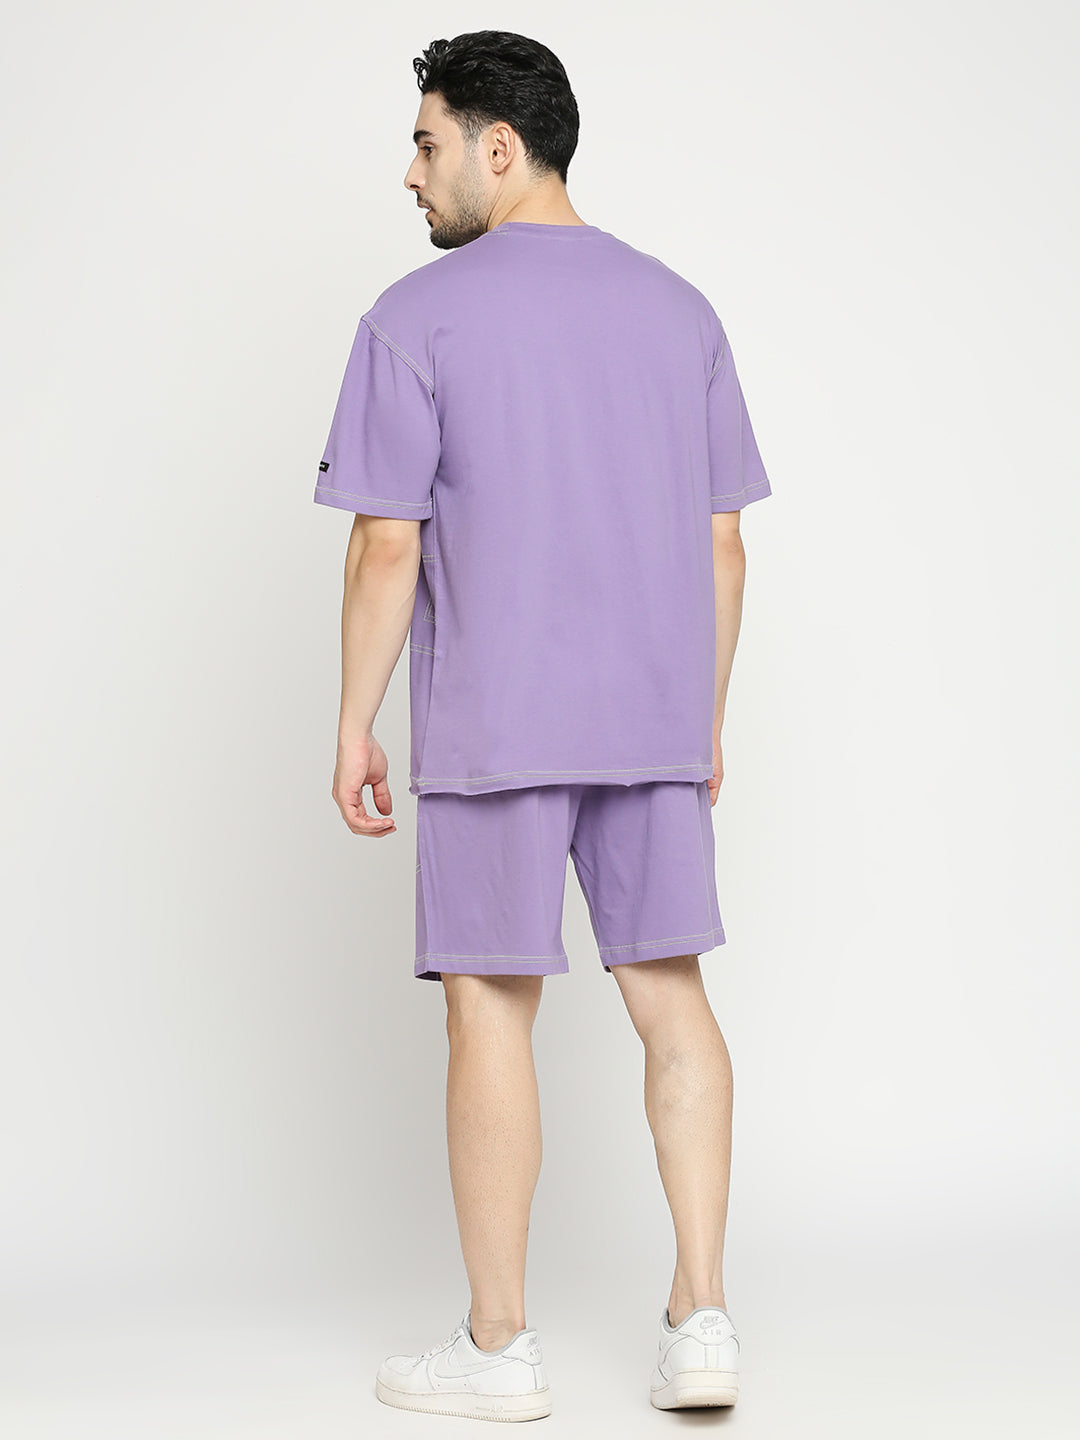 Shop Blamblack Men'S T-Shirt With Shorts Co-Ord Set Online – BlamBlack